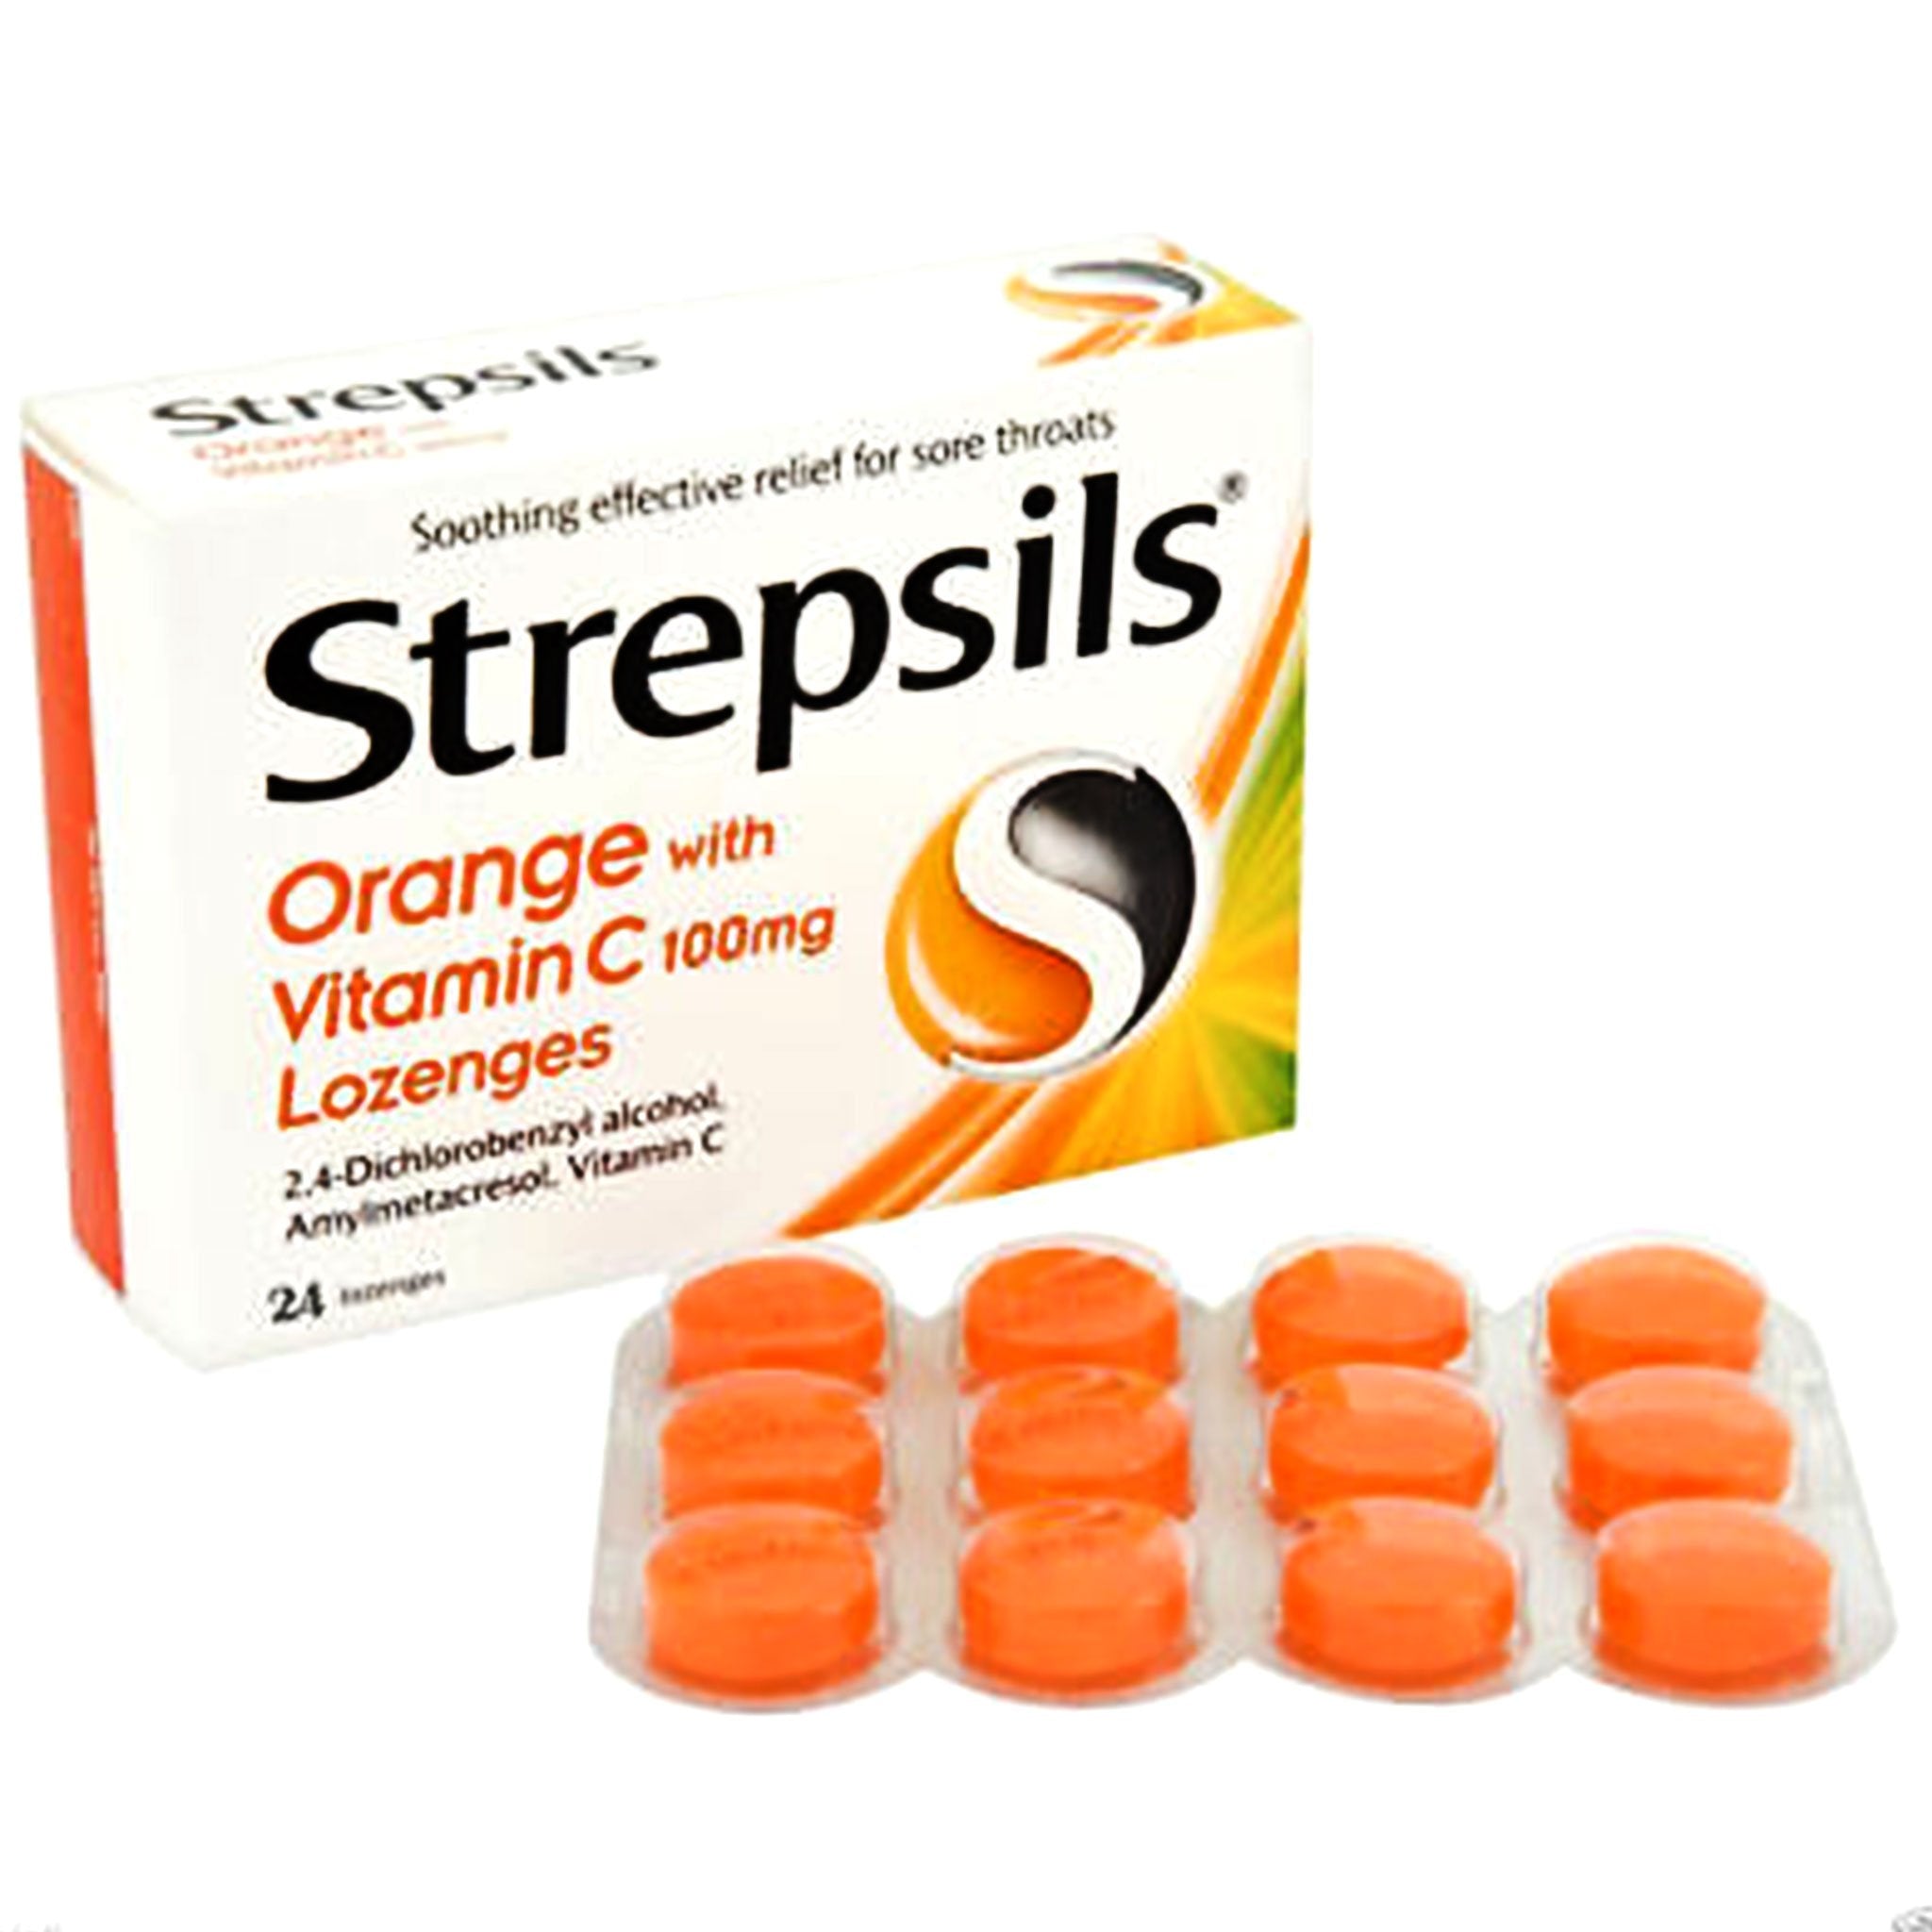 Strepsils Orange with Vitamin C 100mg 24 Lozenges  Dual antibacterial action